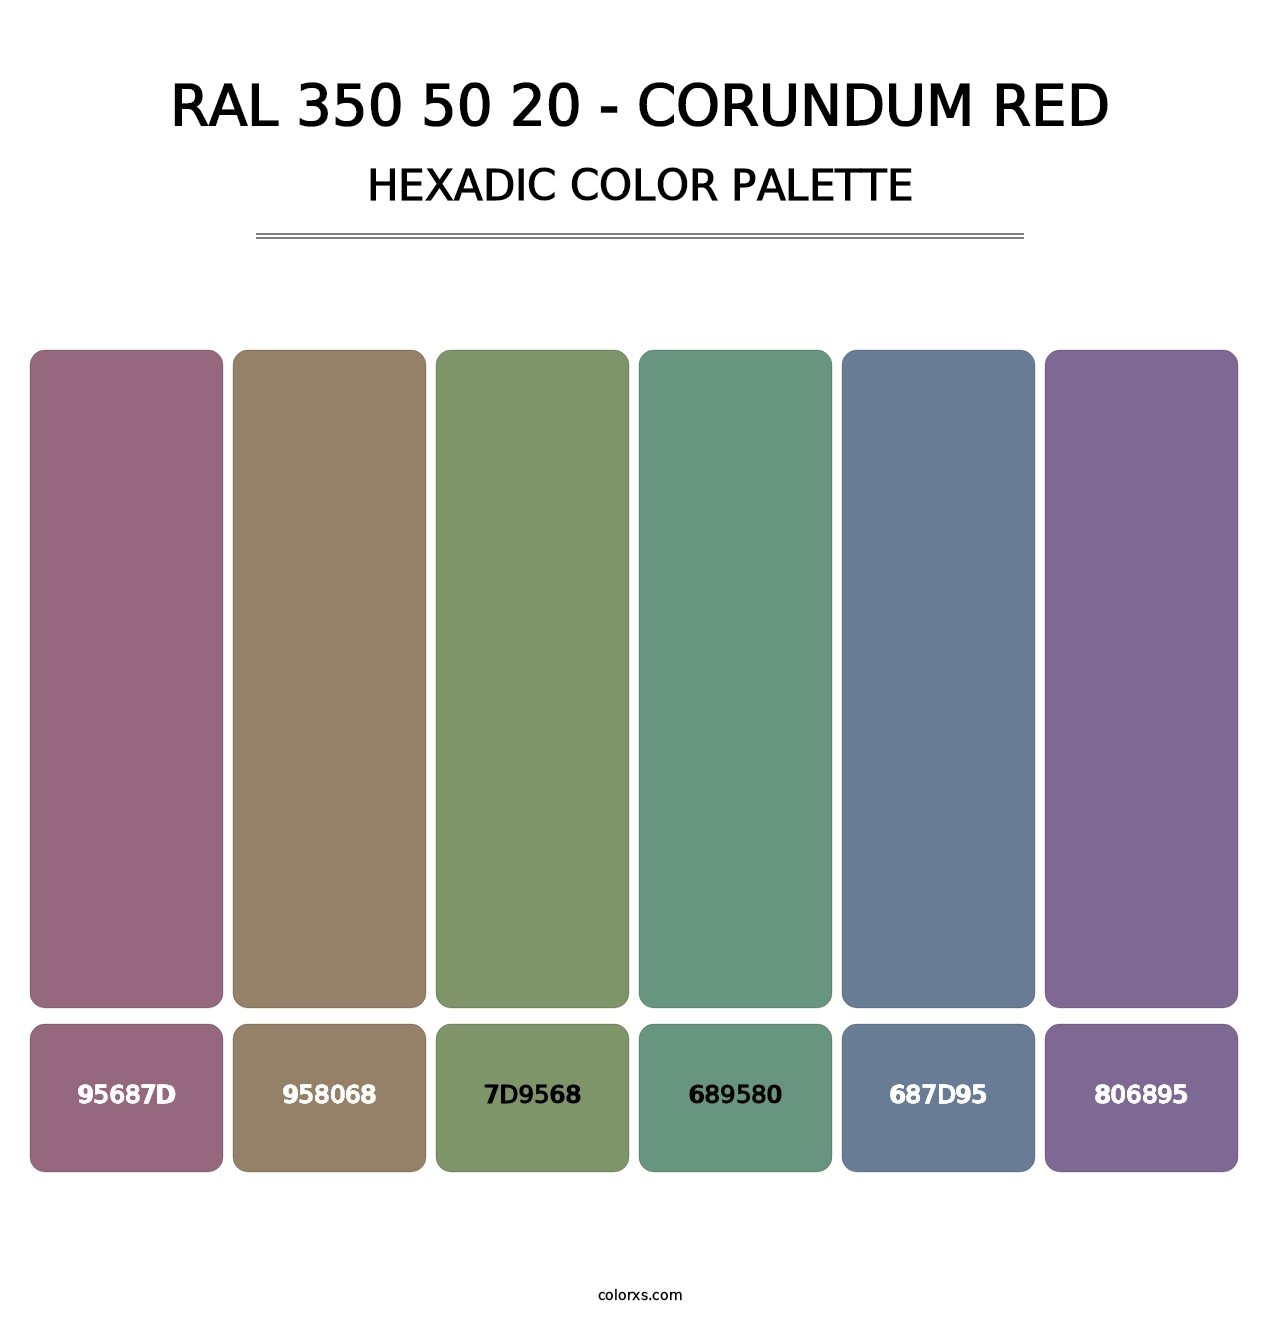 RAL 350 50 20 - Corundum Red - Hexadic Color Palette